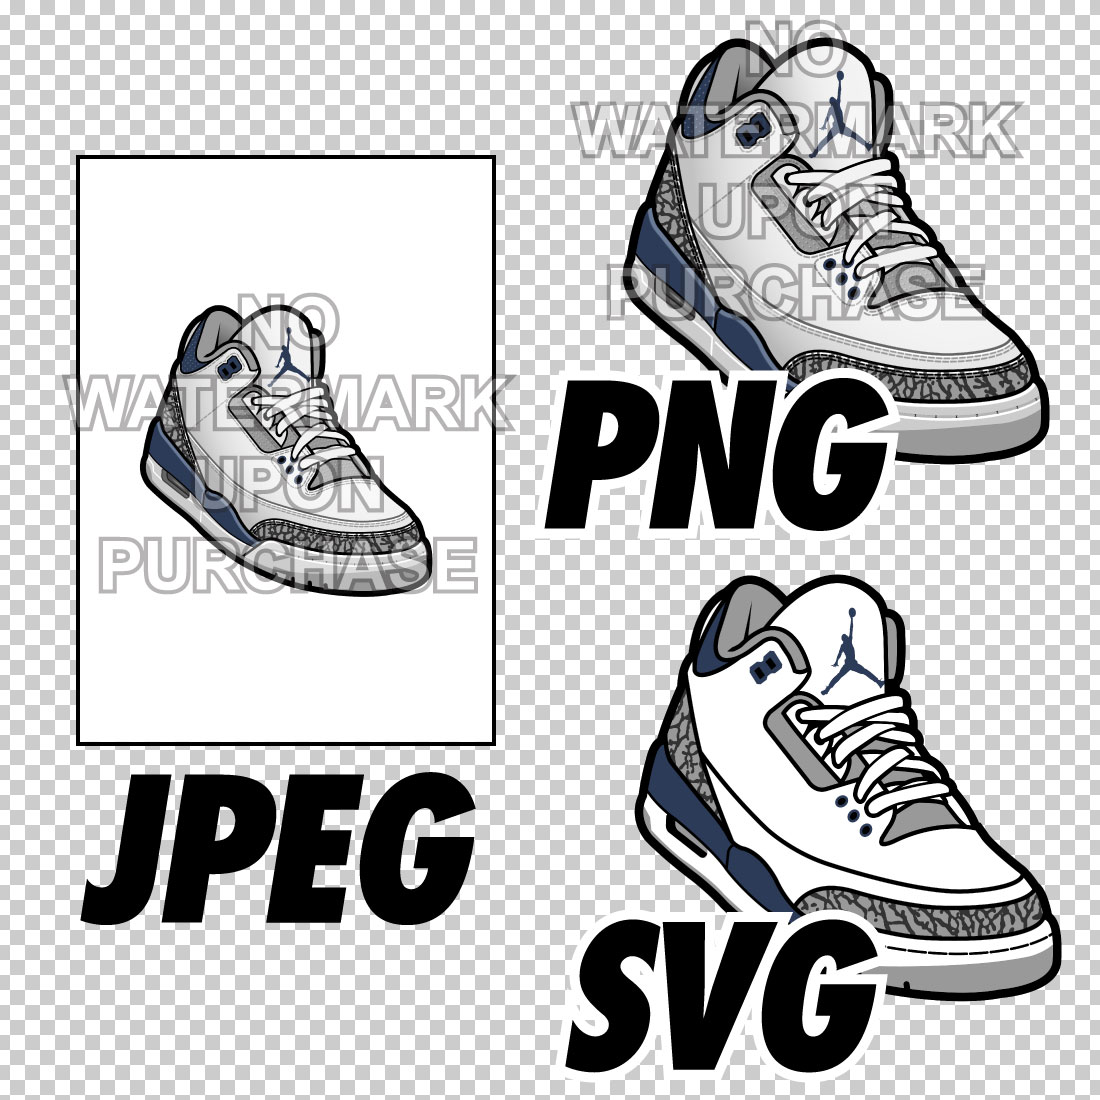 Air Jordan 3 Midnight Navy White JPEG PNG SVG right & left shoe bundle preview image.